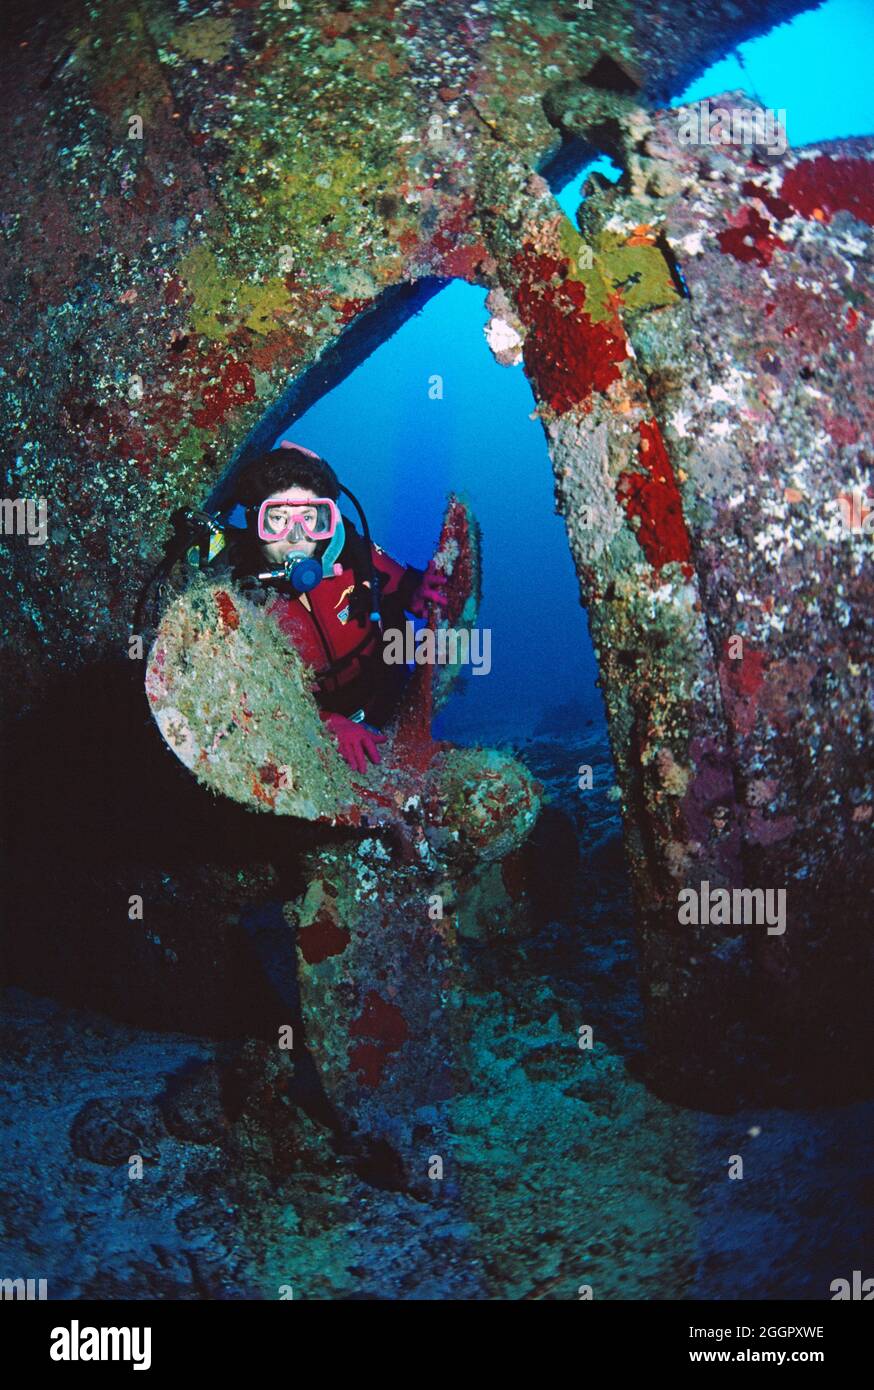 Micronesia. Subacquea donna subacquea con elica naufragio e timone. Foto Stock